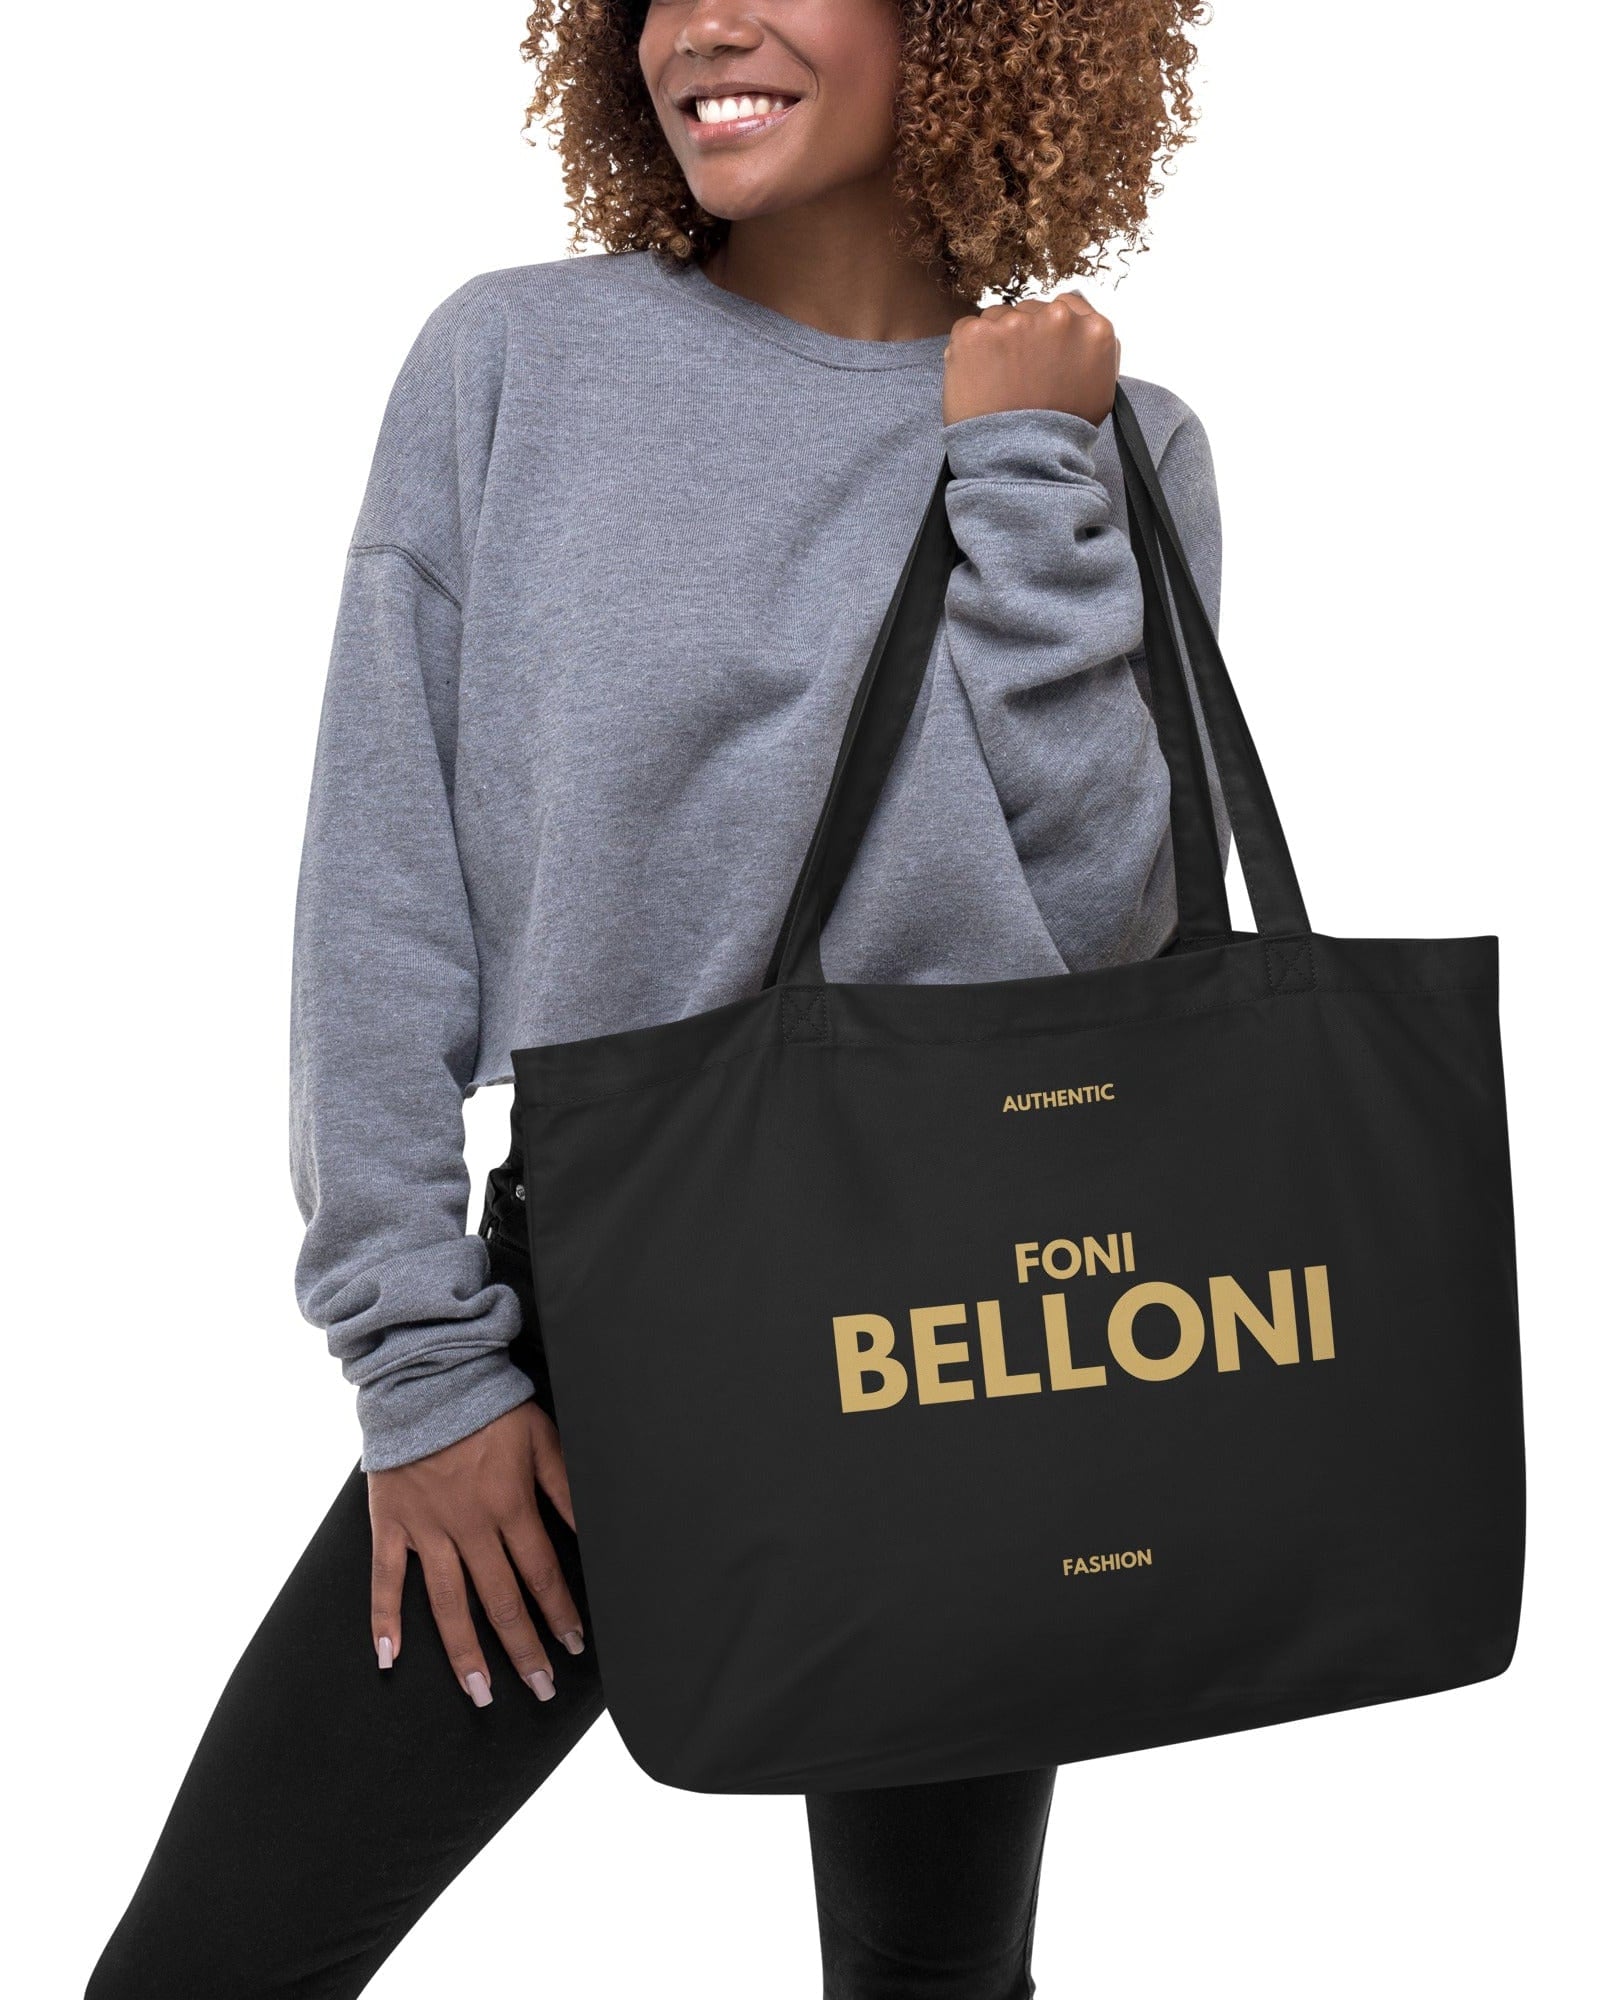 Foni Belloni Tote Bag | Organic Cotton | Large Tote Bag Jolly & Goode